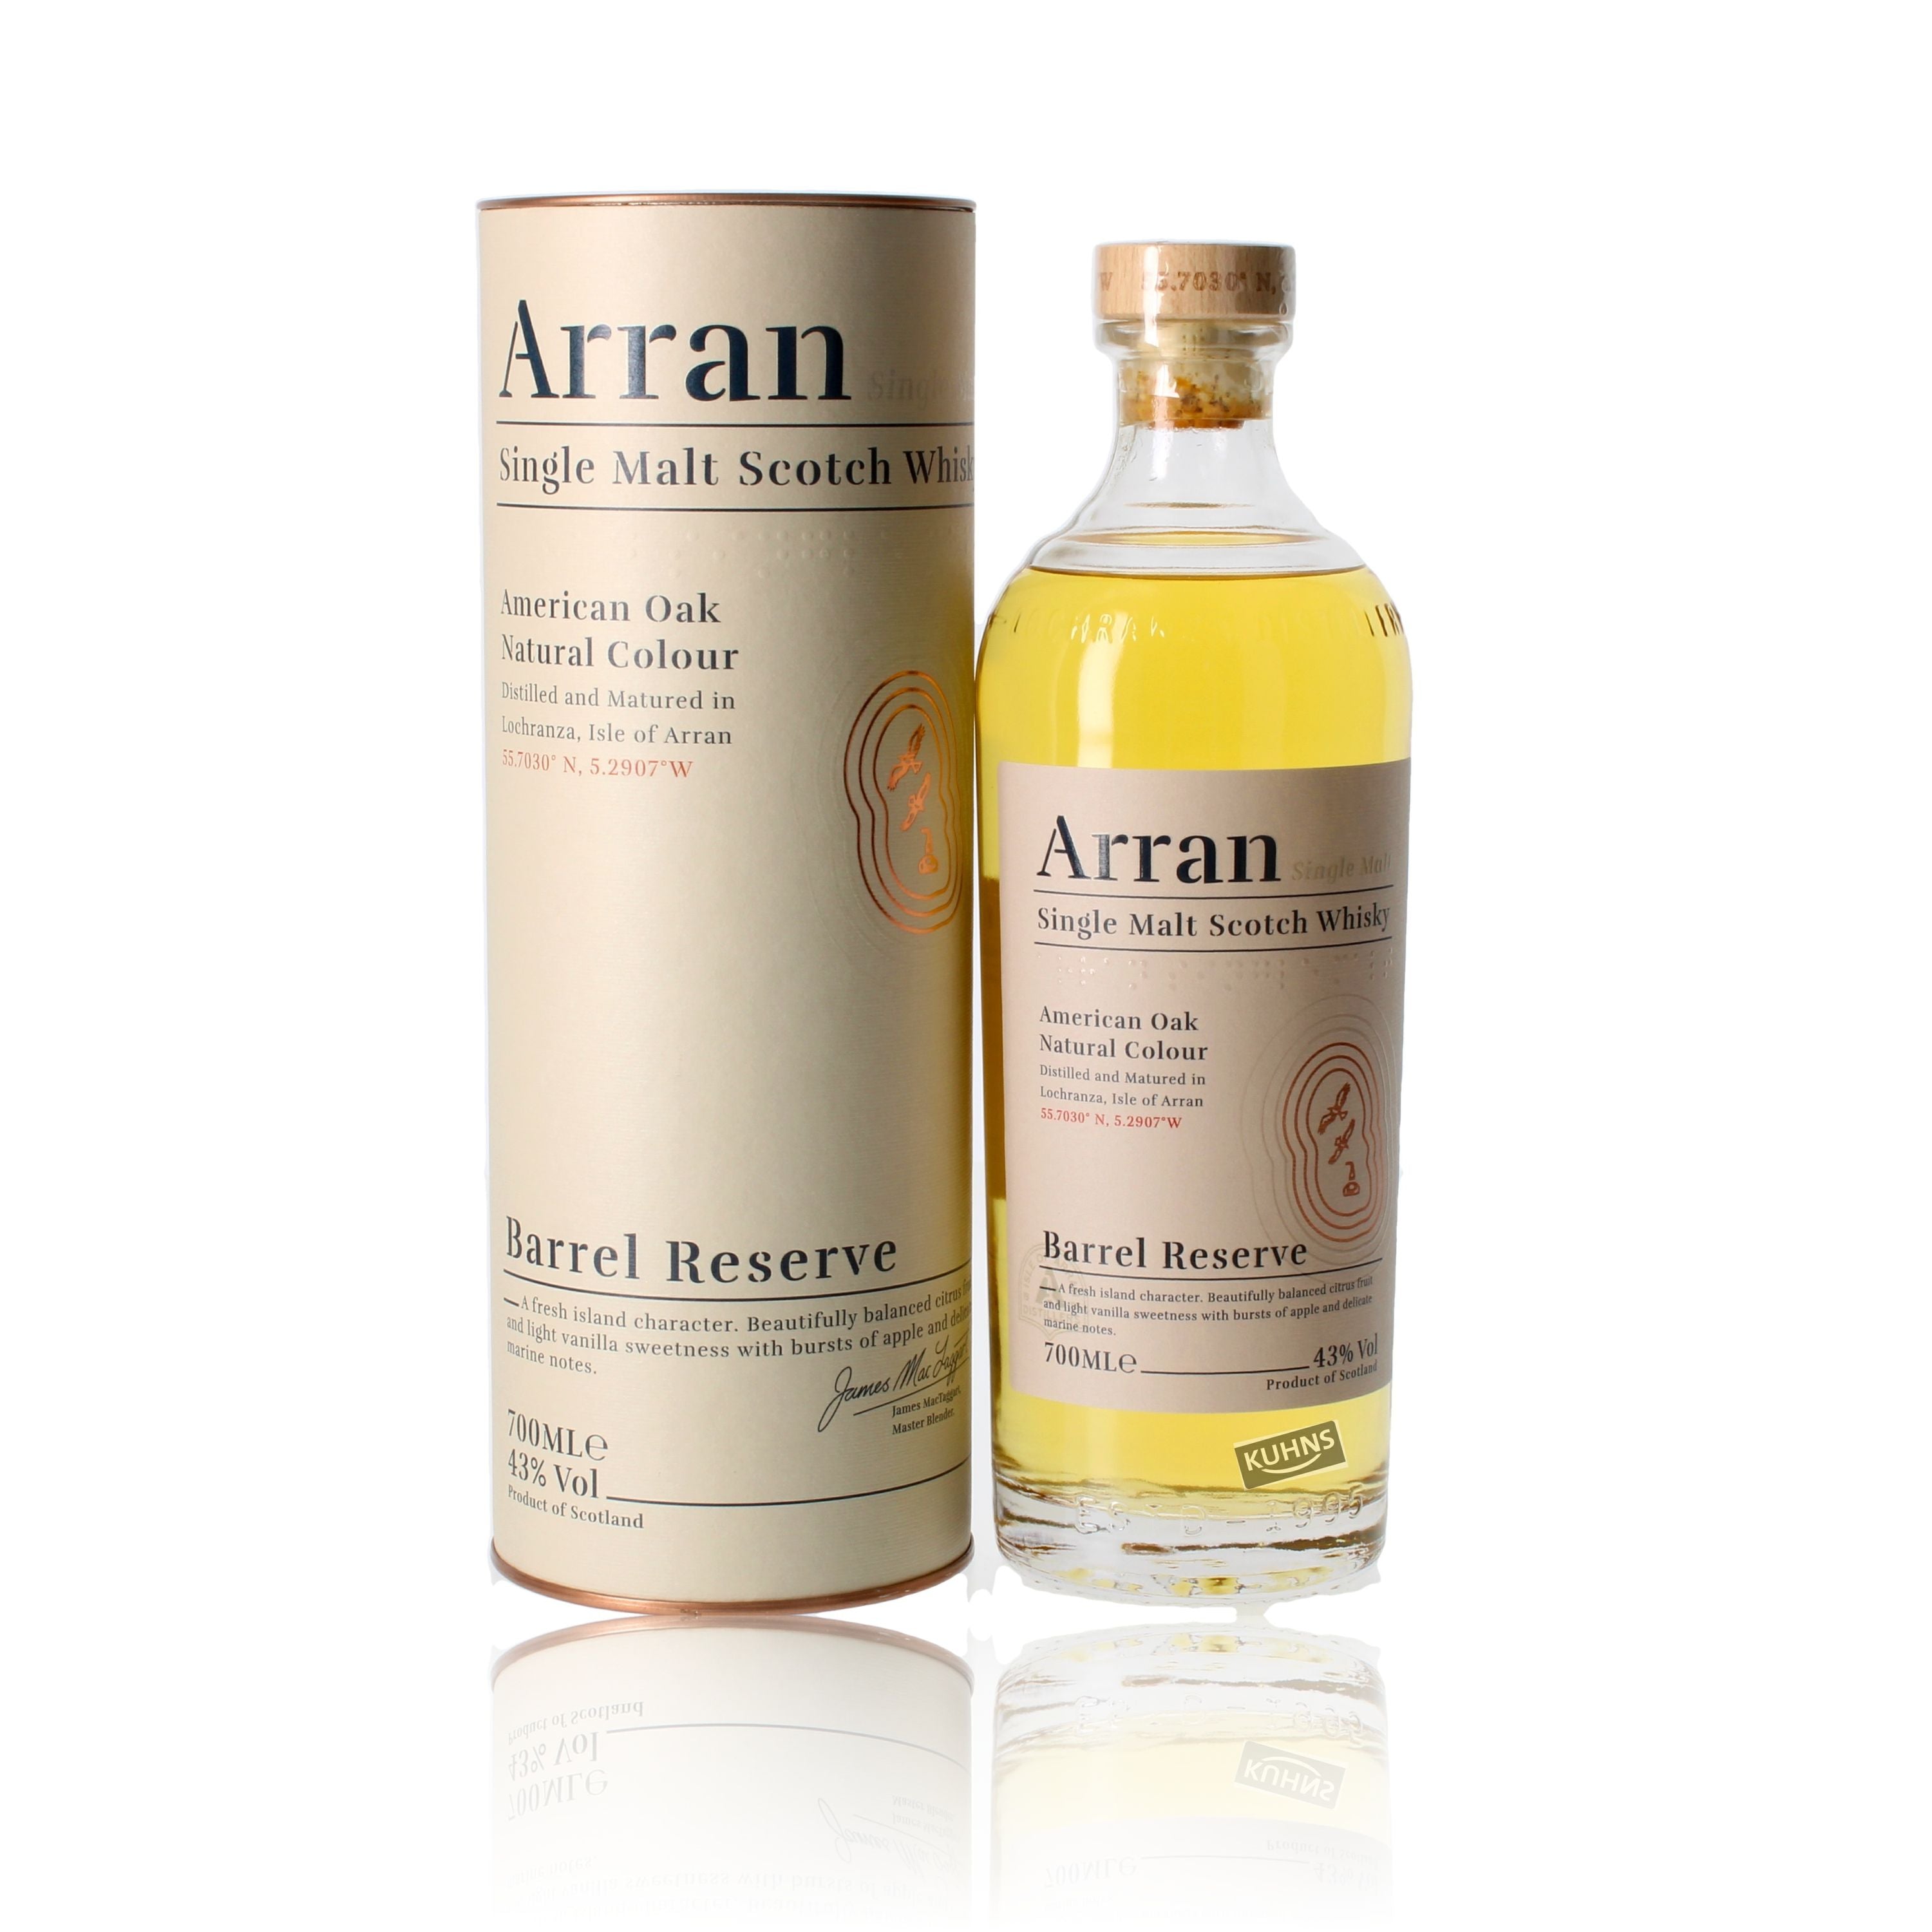 Arran Barrel Reserve Single Malt Scotch Whiskey 0.7l, alc. 43% by volume